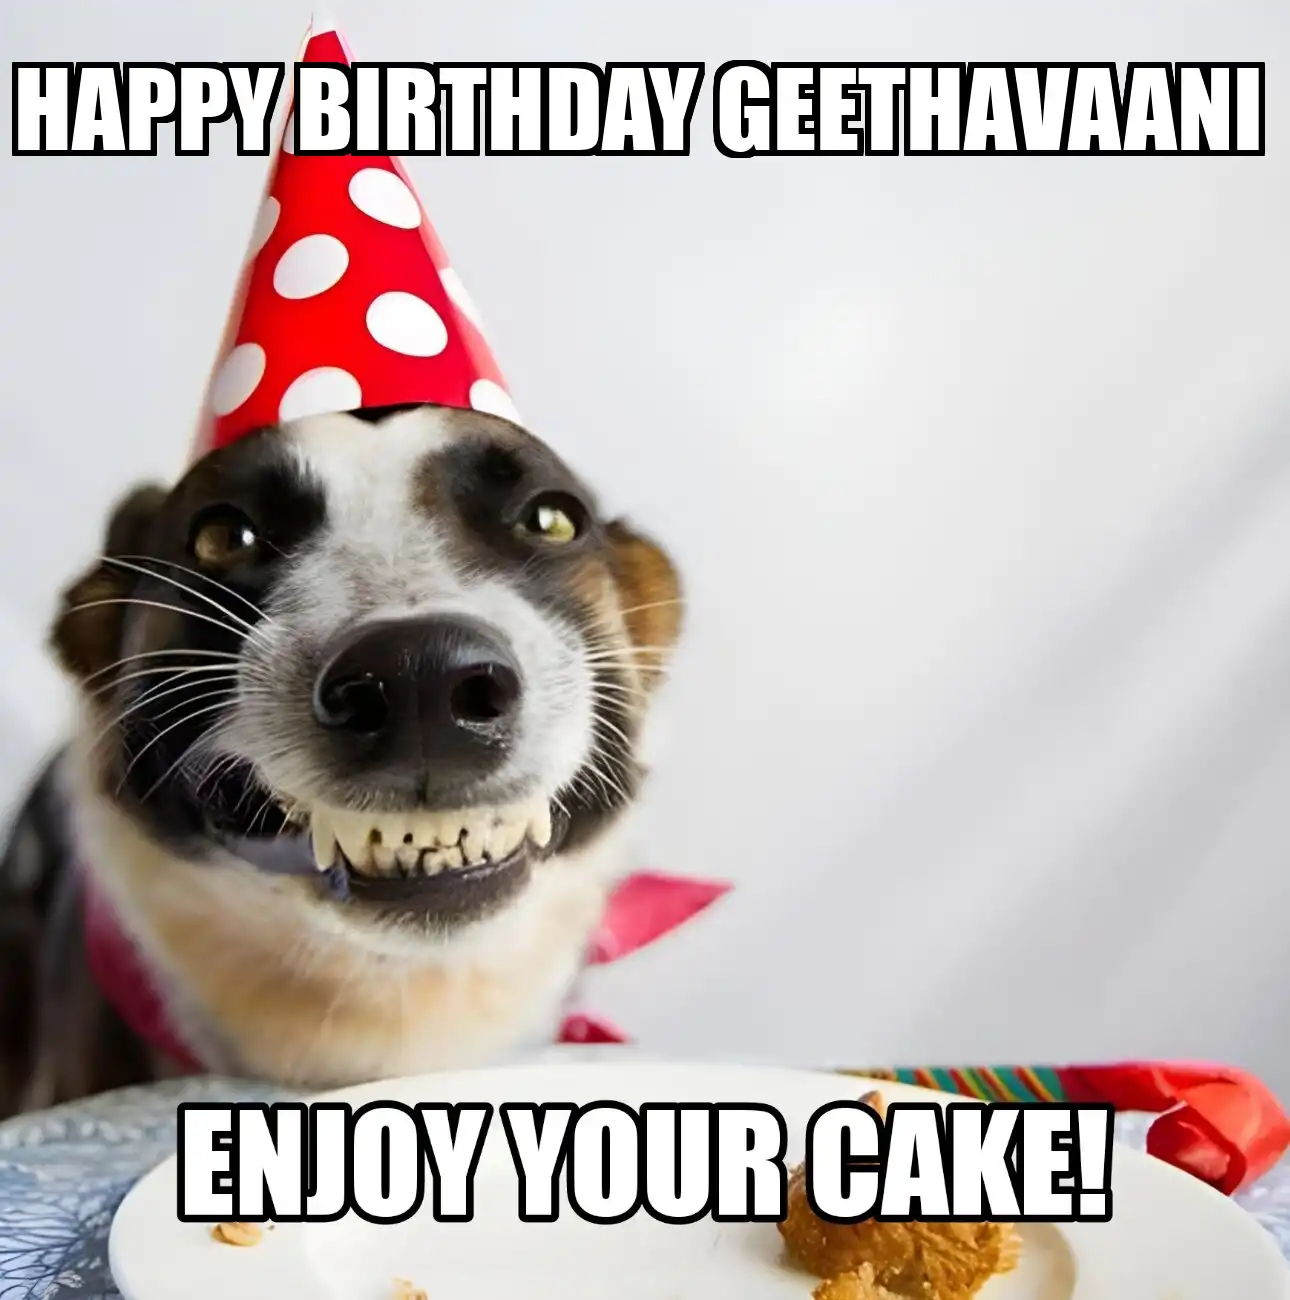 Happy Birthday Geethavaani Enjoy Your Cake Dog Meme